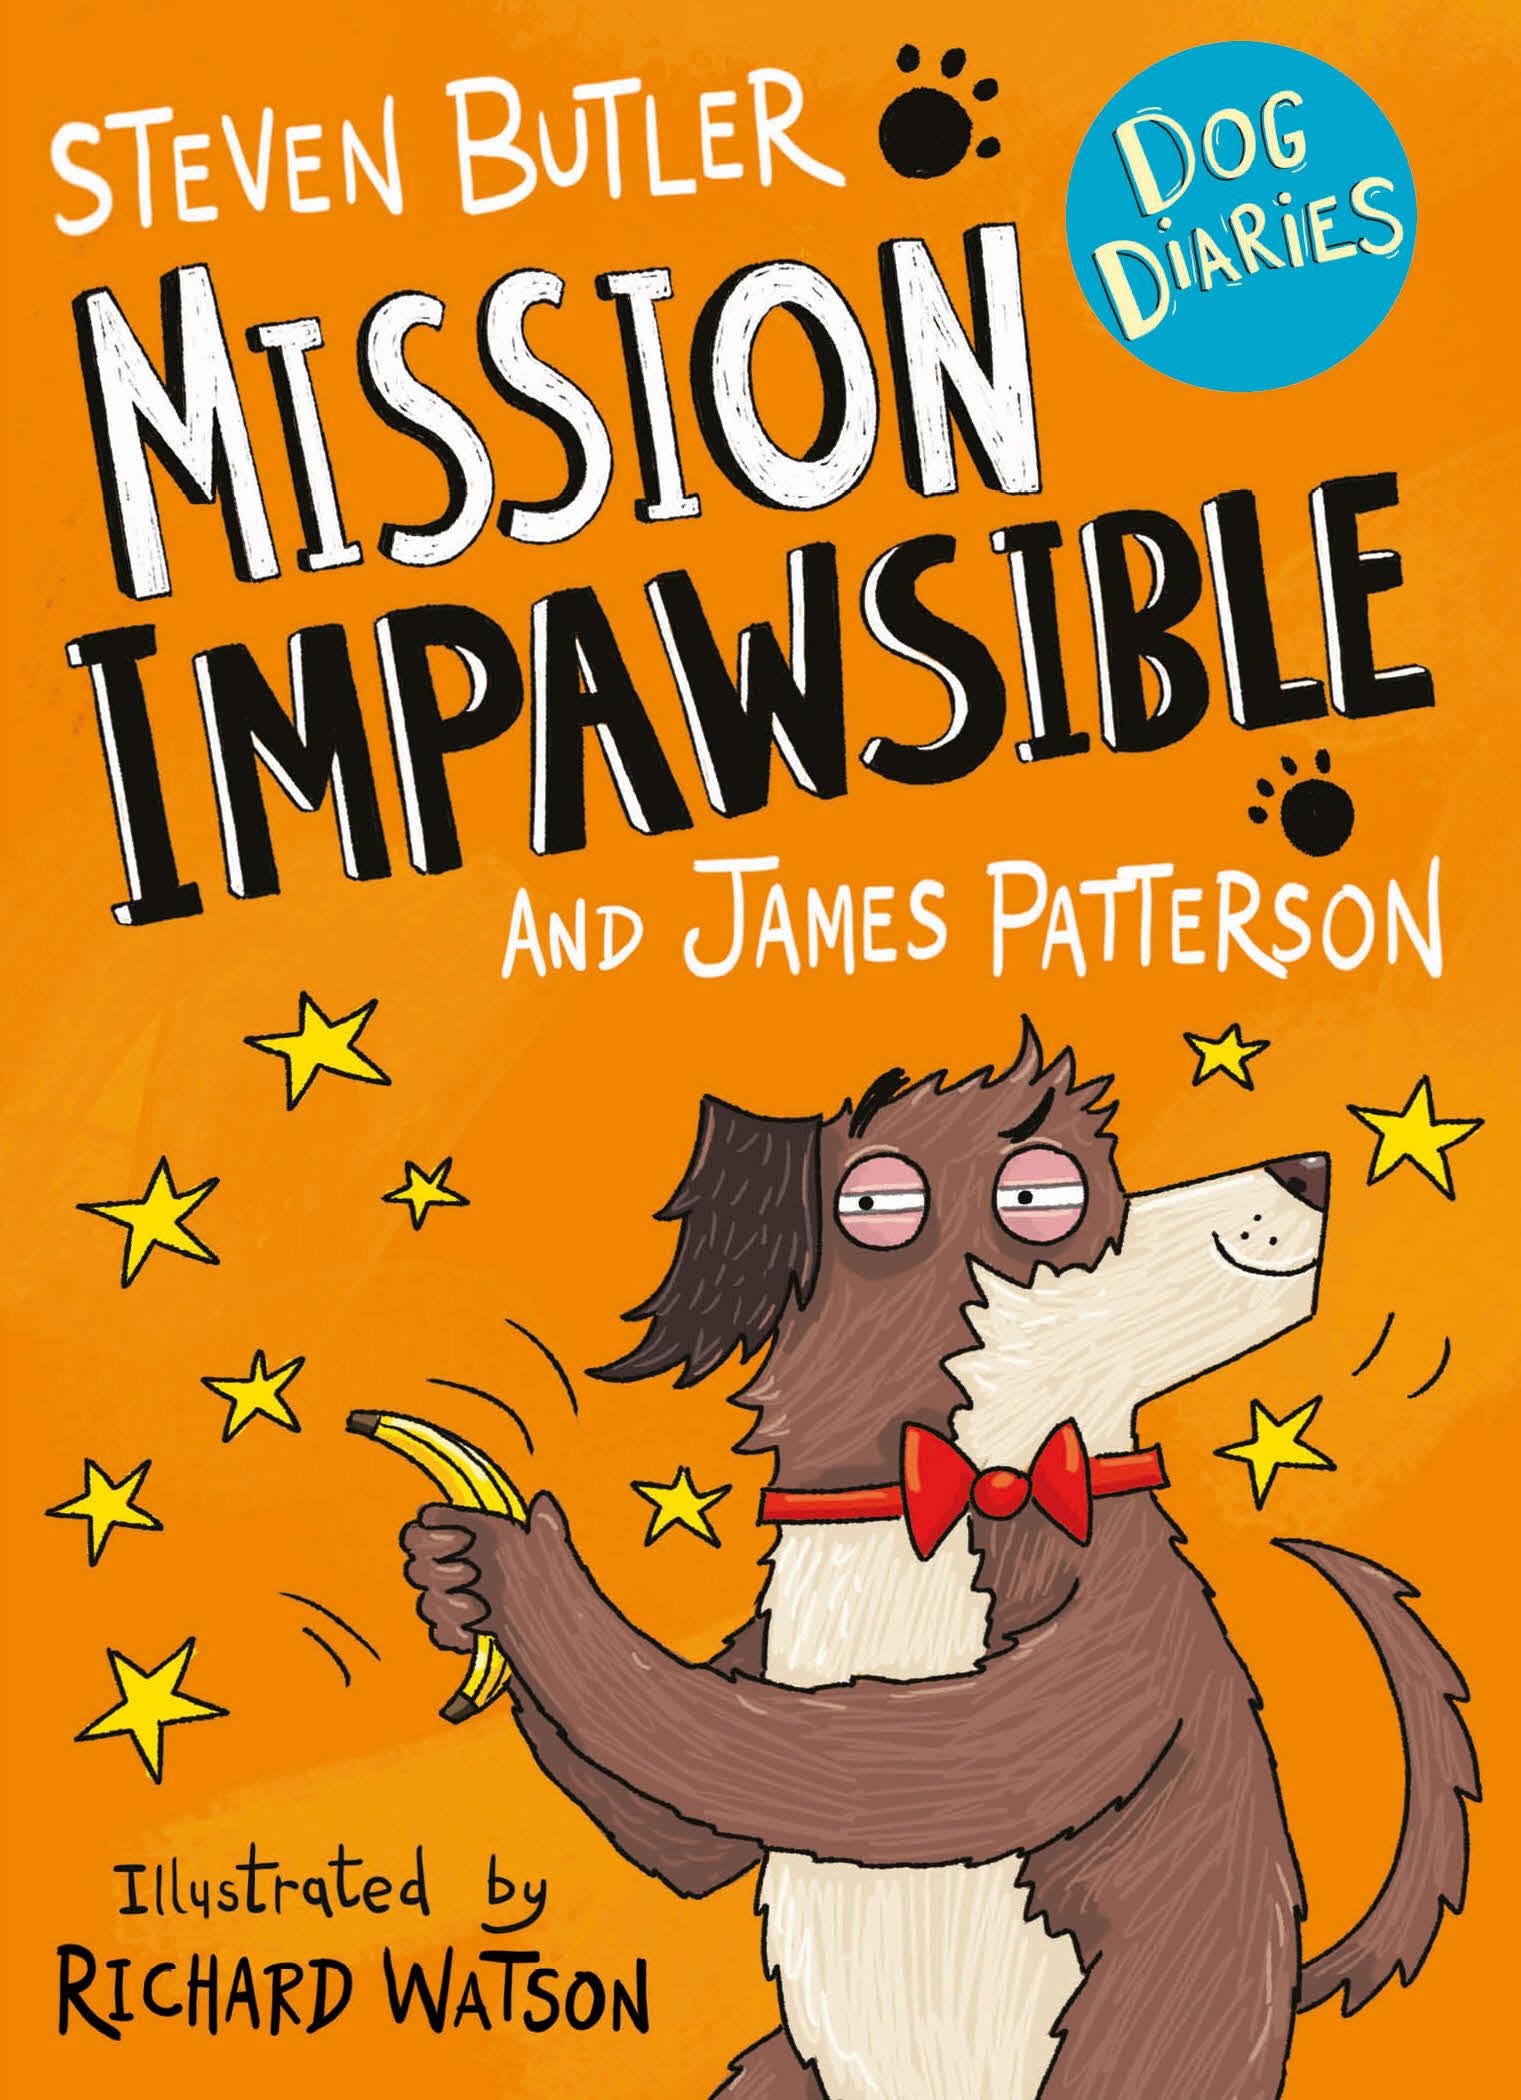 Dog Diaries: Mission Impawsible - James Patterson